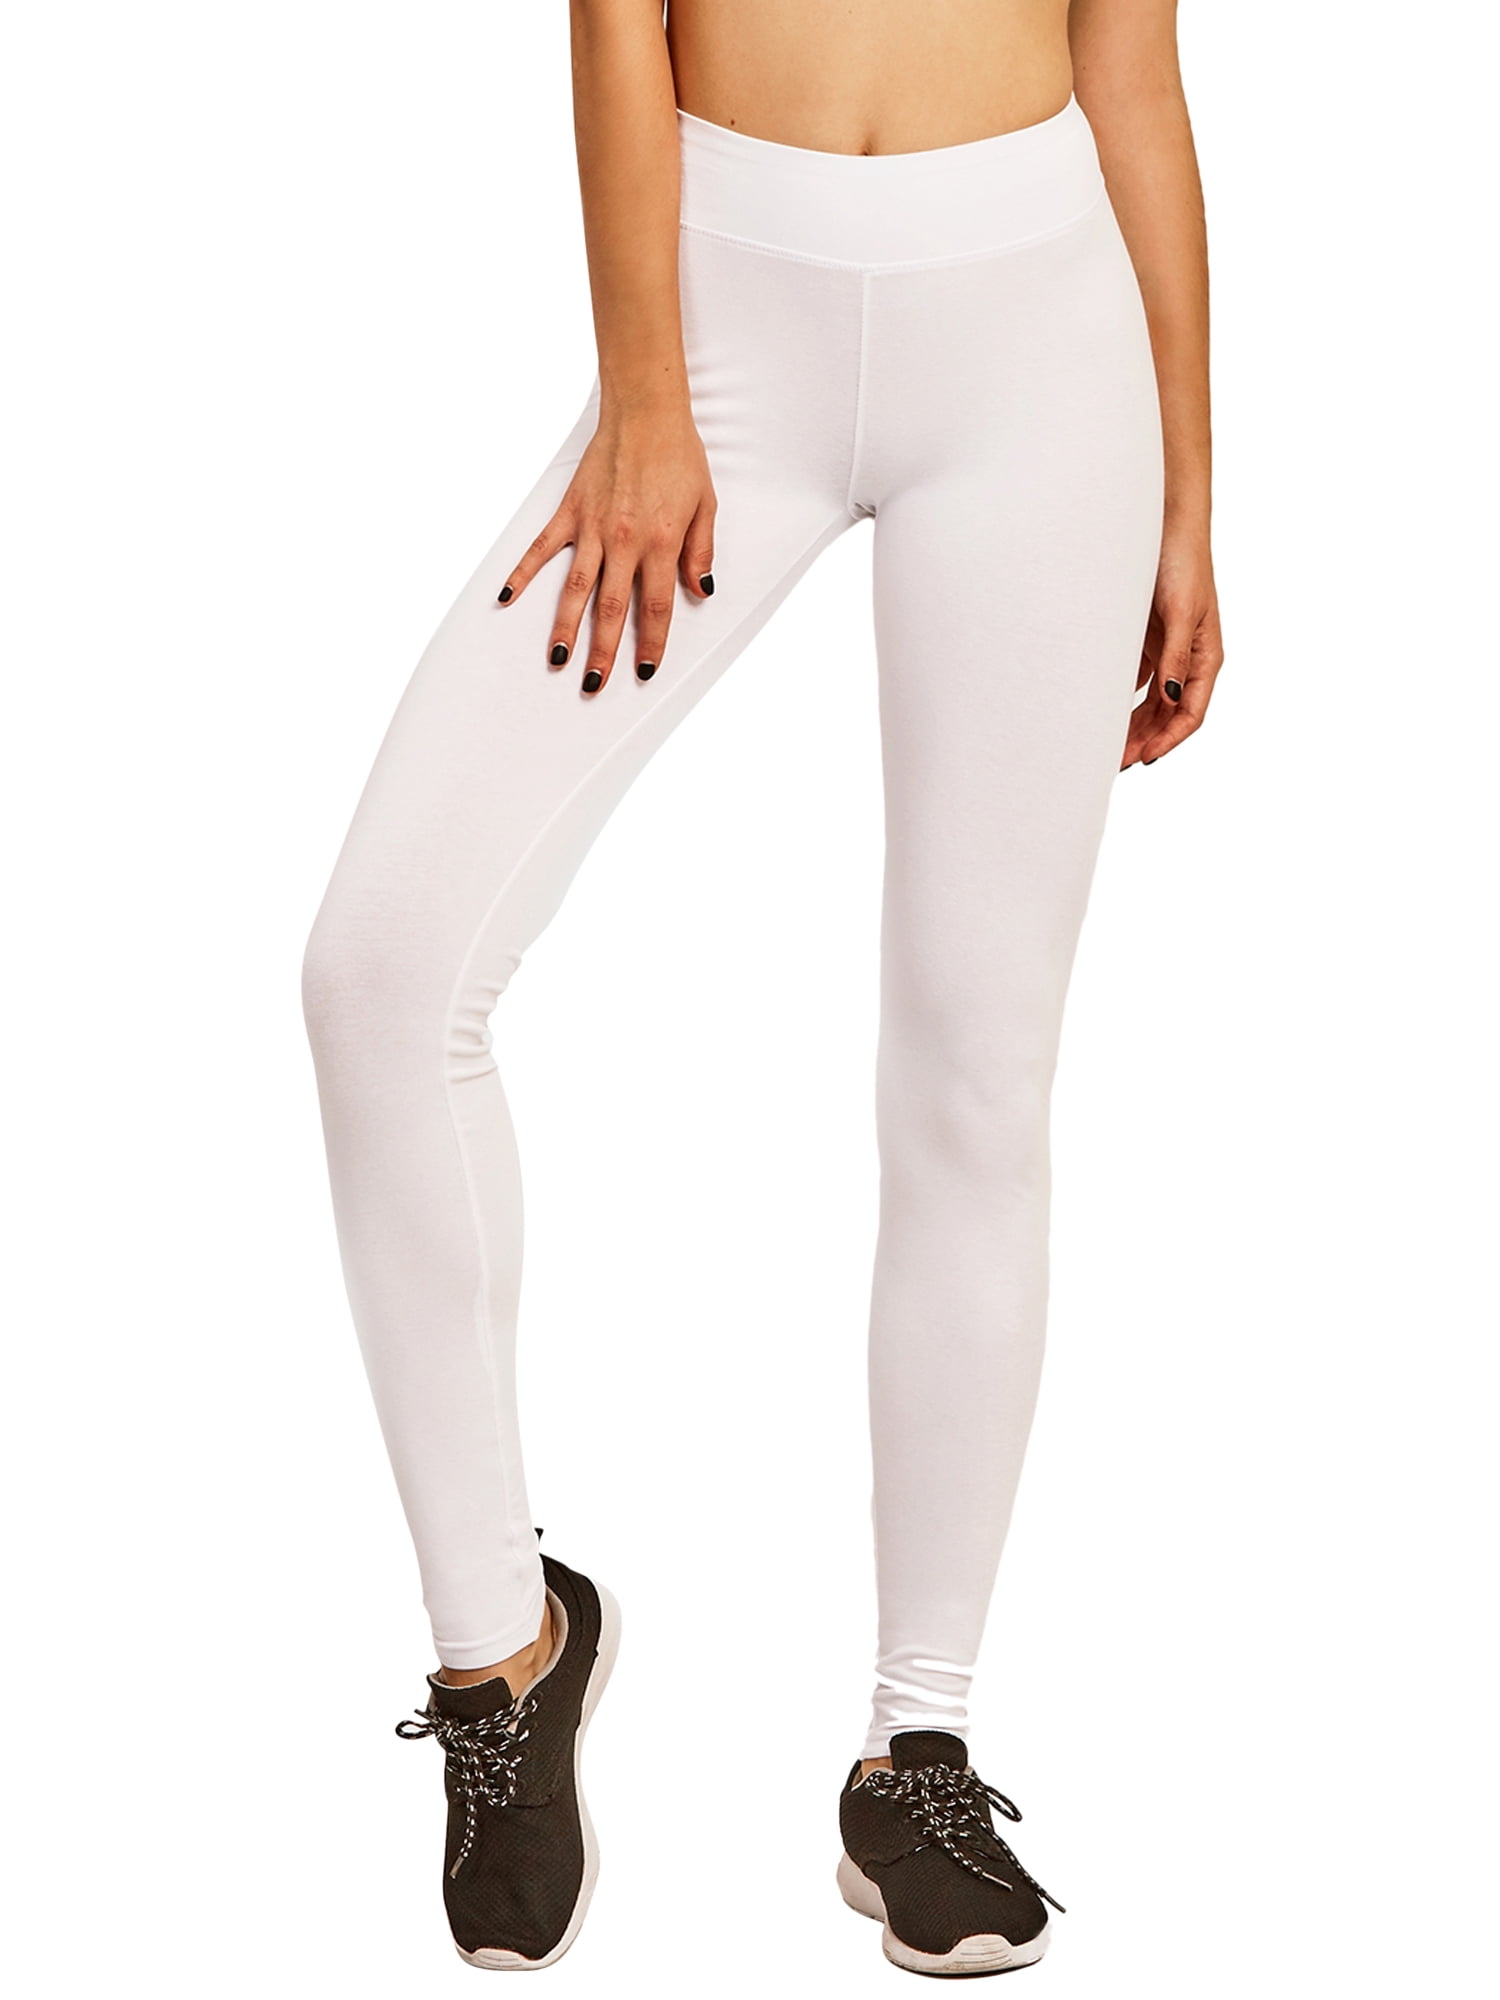 Sofra Women & Plus Cotton High Waist Full Length Cotton Workout Leggings  (White, L) 